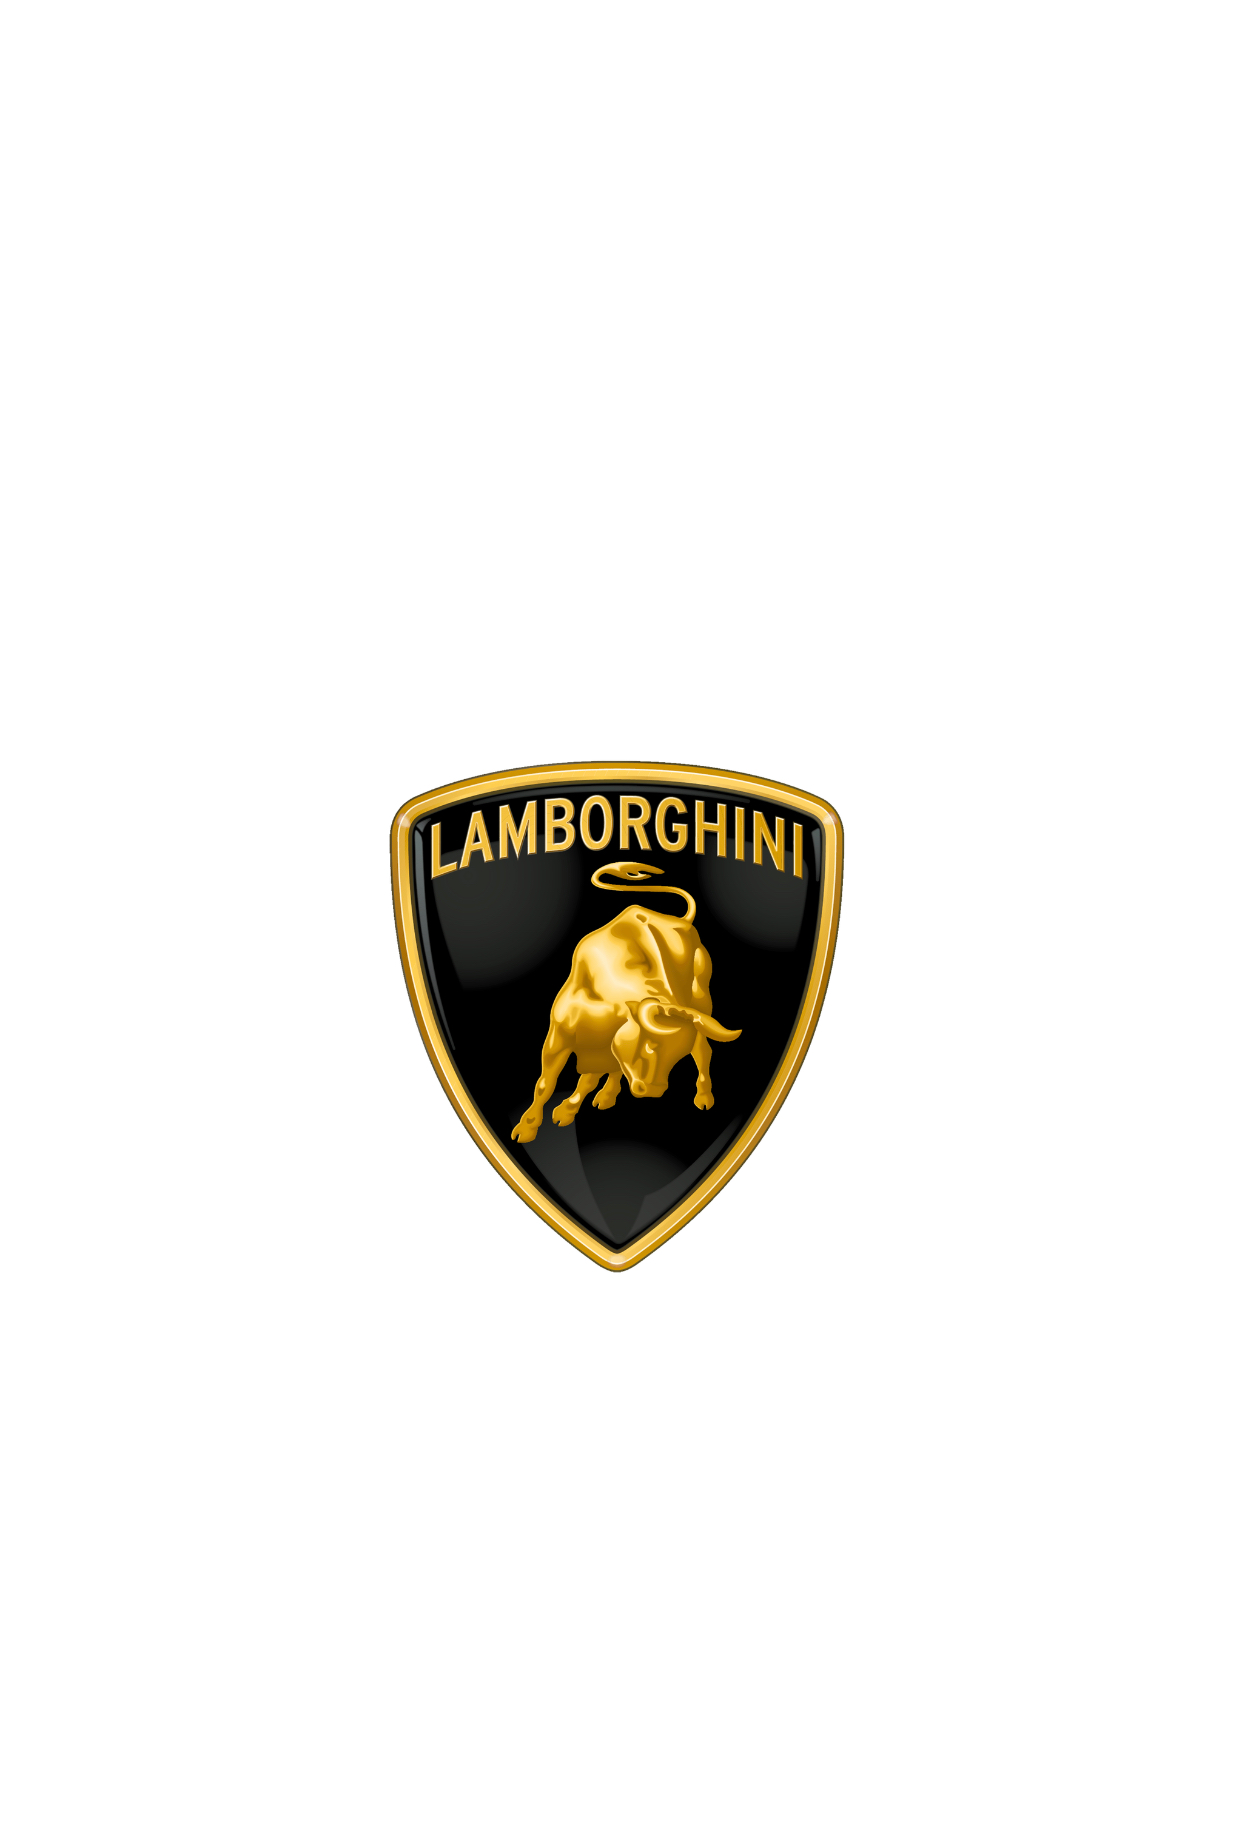 Lamborghini Urus MK1 Luftfahrwerk tieferlegen